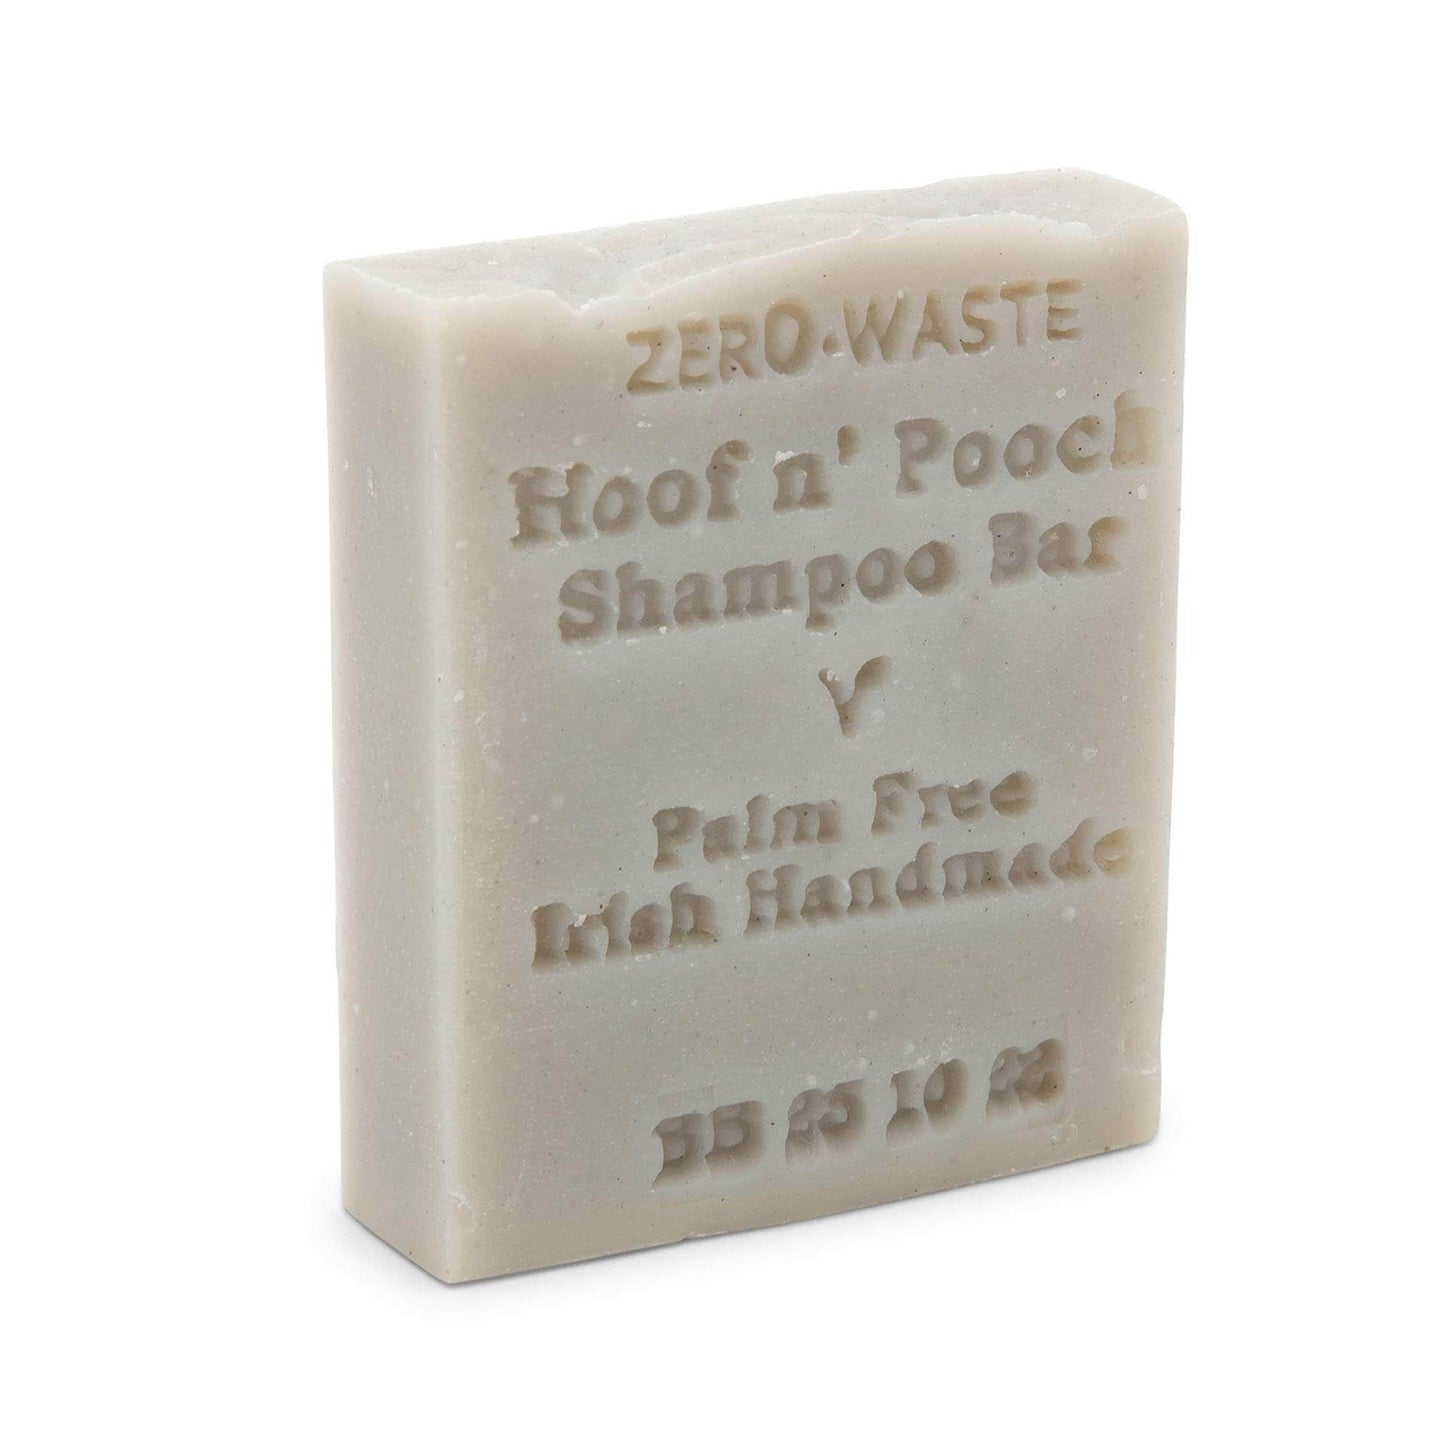 Palm Free Irish Soap Soap Palm Free Zero Waste Handmade Soap - Hoof 'N Pooch Shampoo Bar